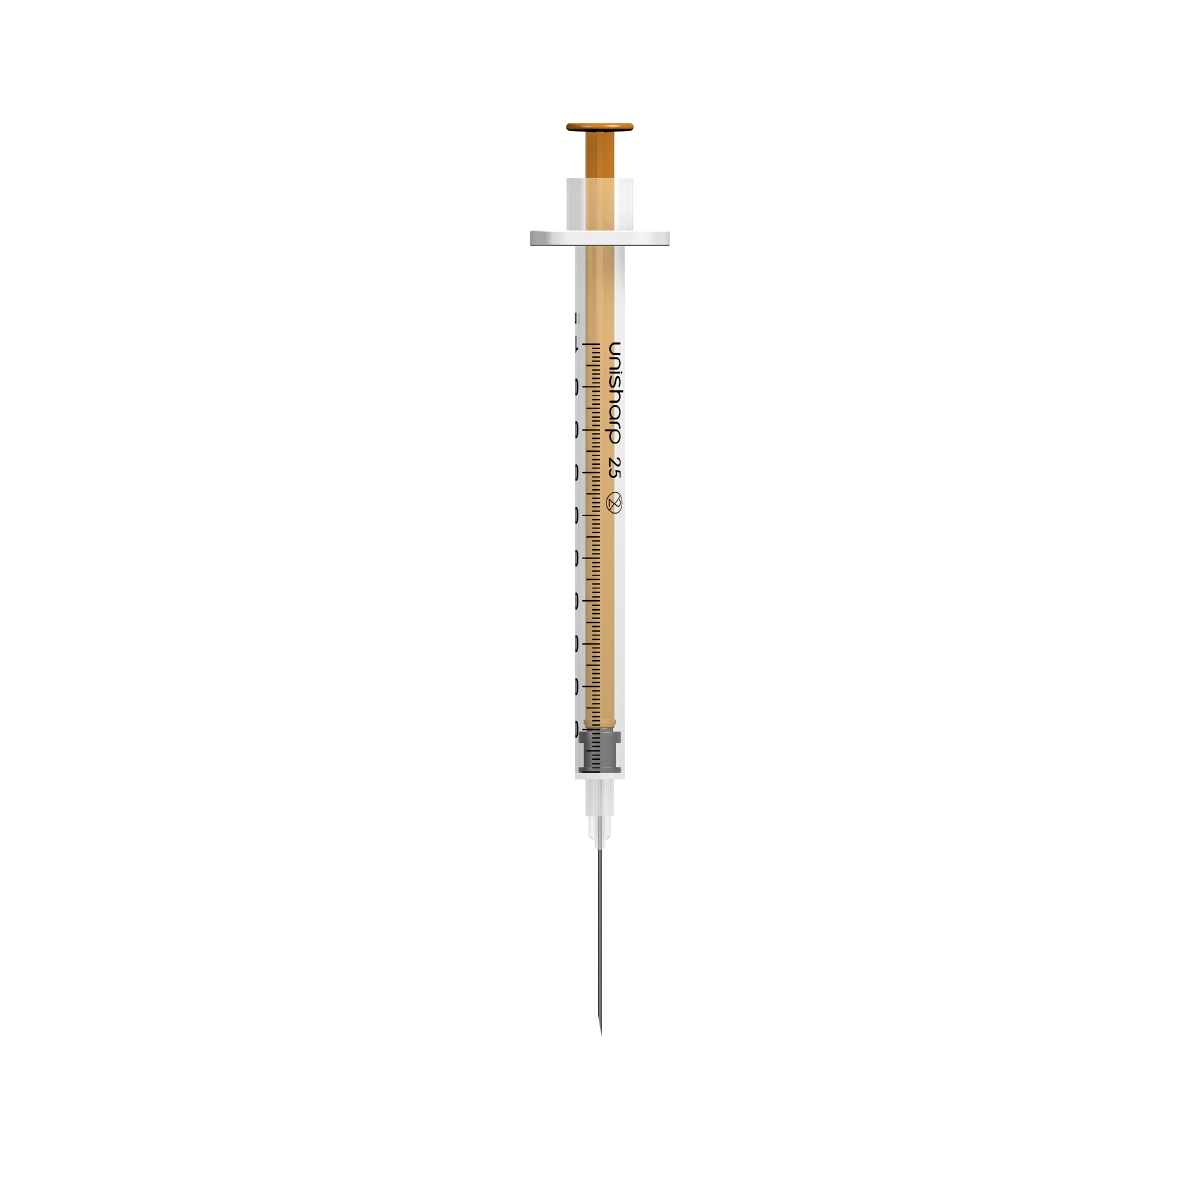 Unisharp 1mL 25G 25mm (1 inch) Fixed Needle Low Dead Space Syringe